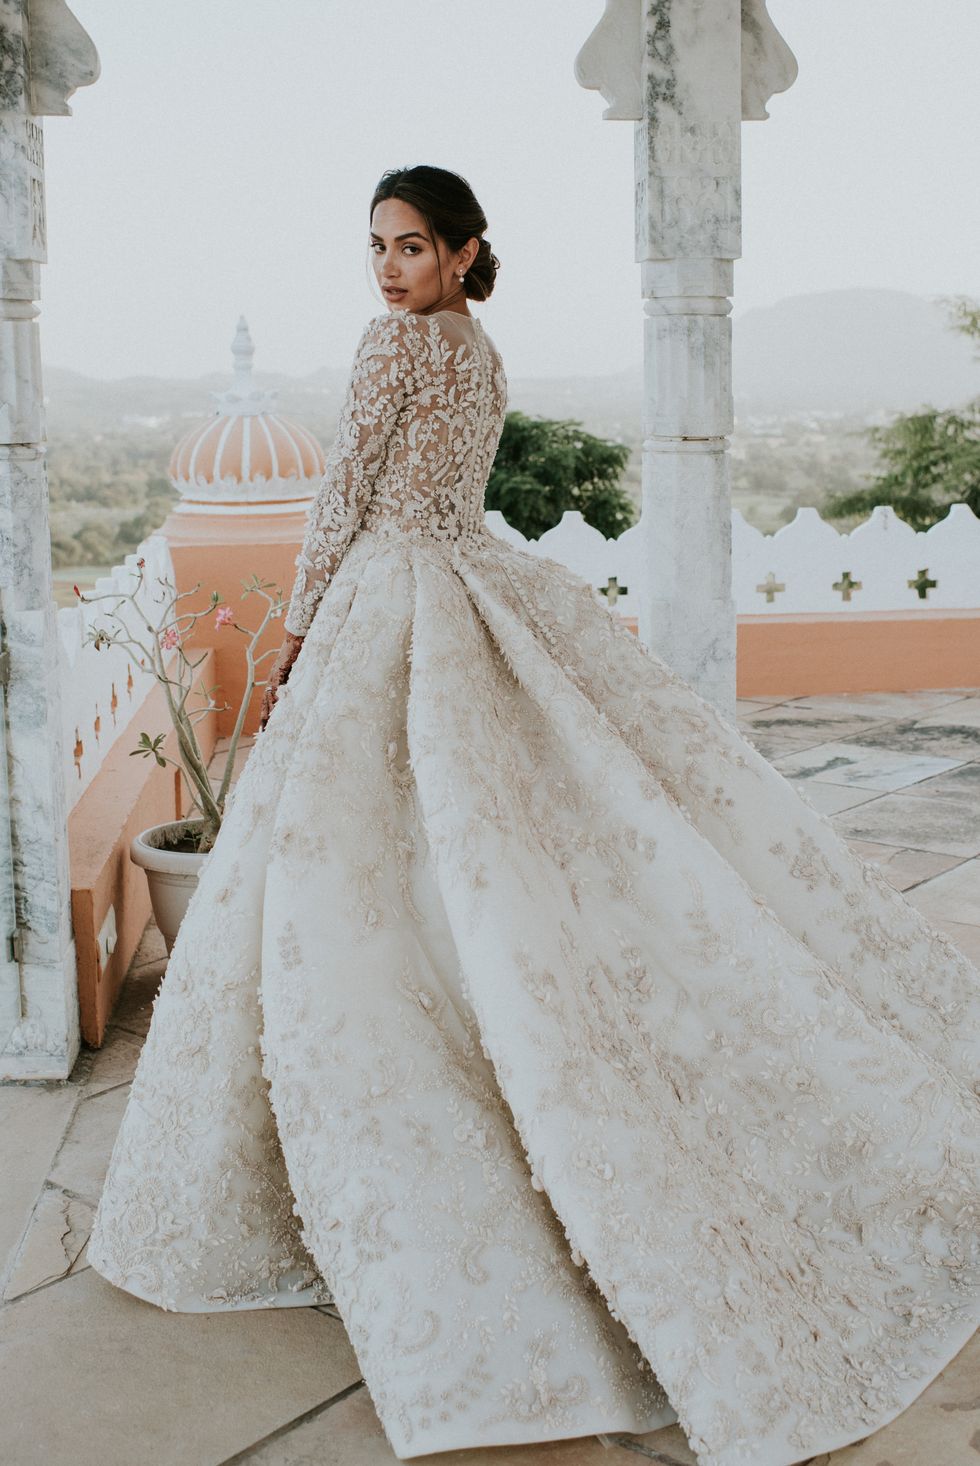 South Asian & Modern Indian Wedding Dresses